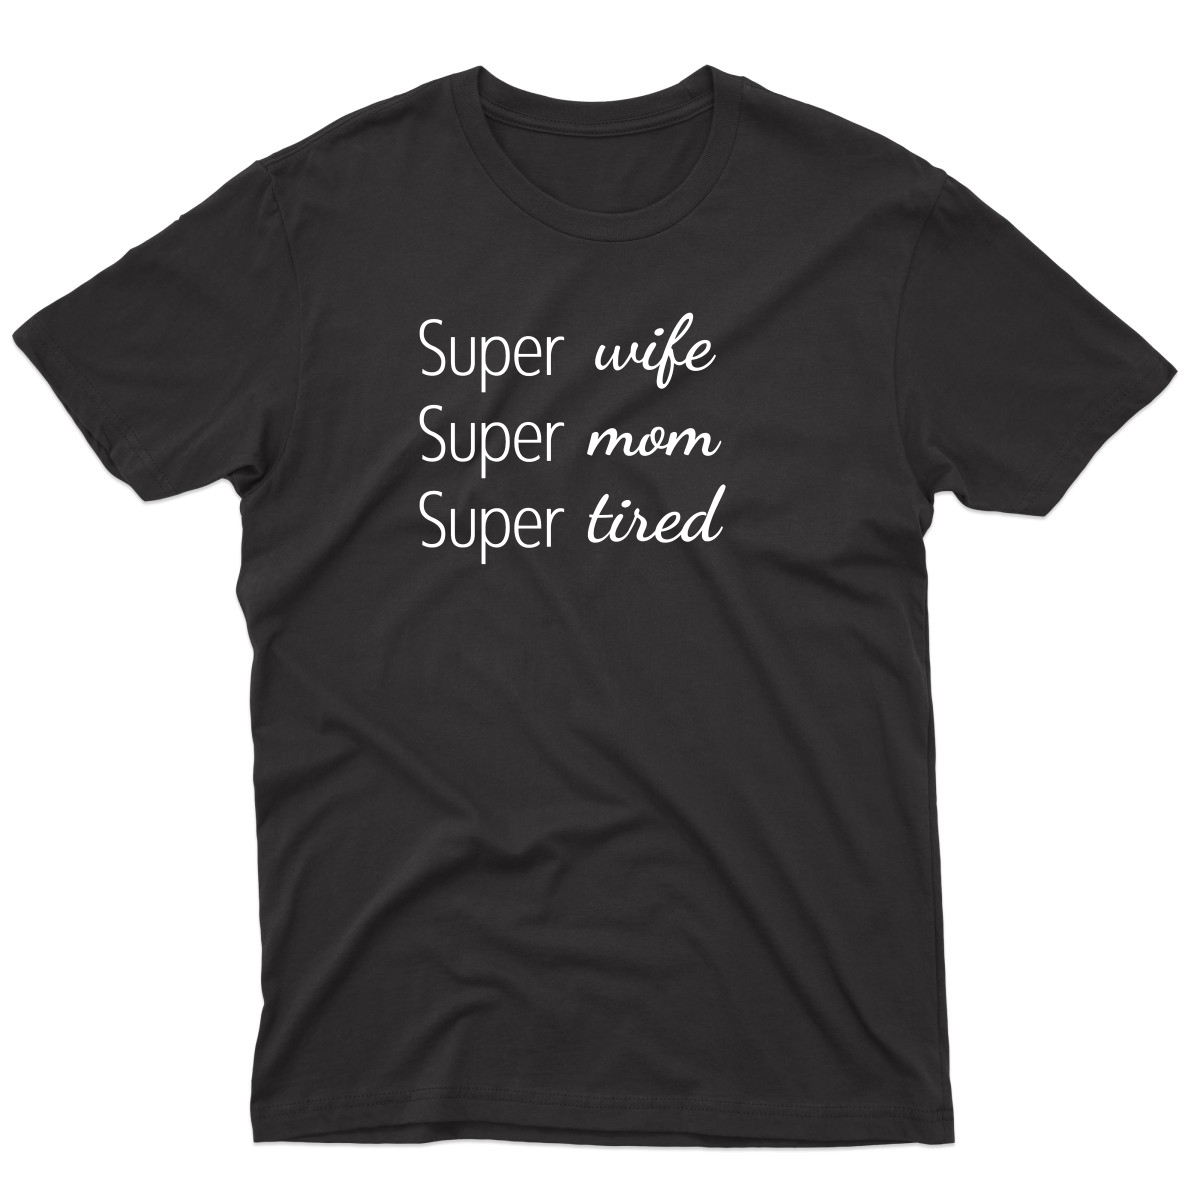 Super Mom Super Wife Super Tired Men's T-shirt | Black